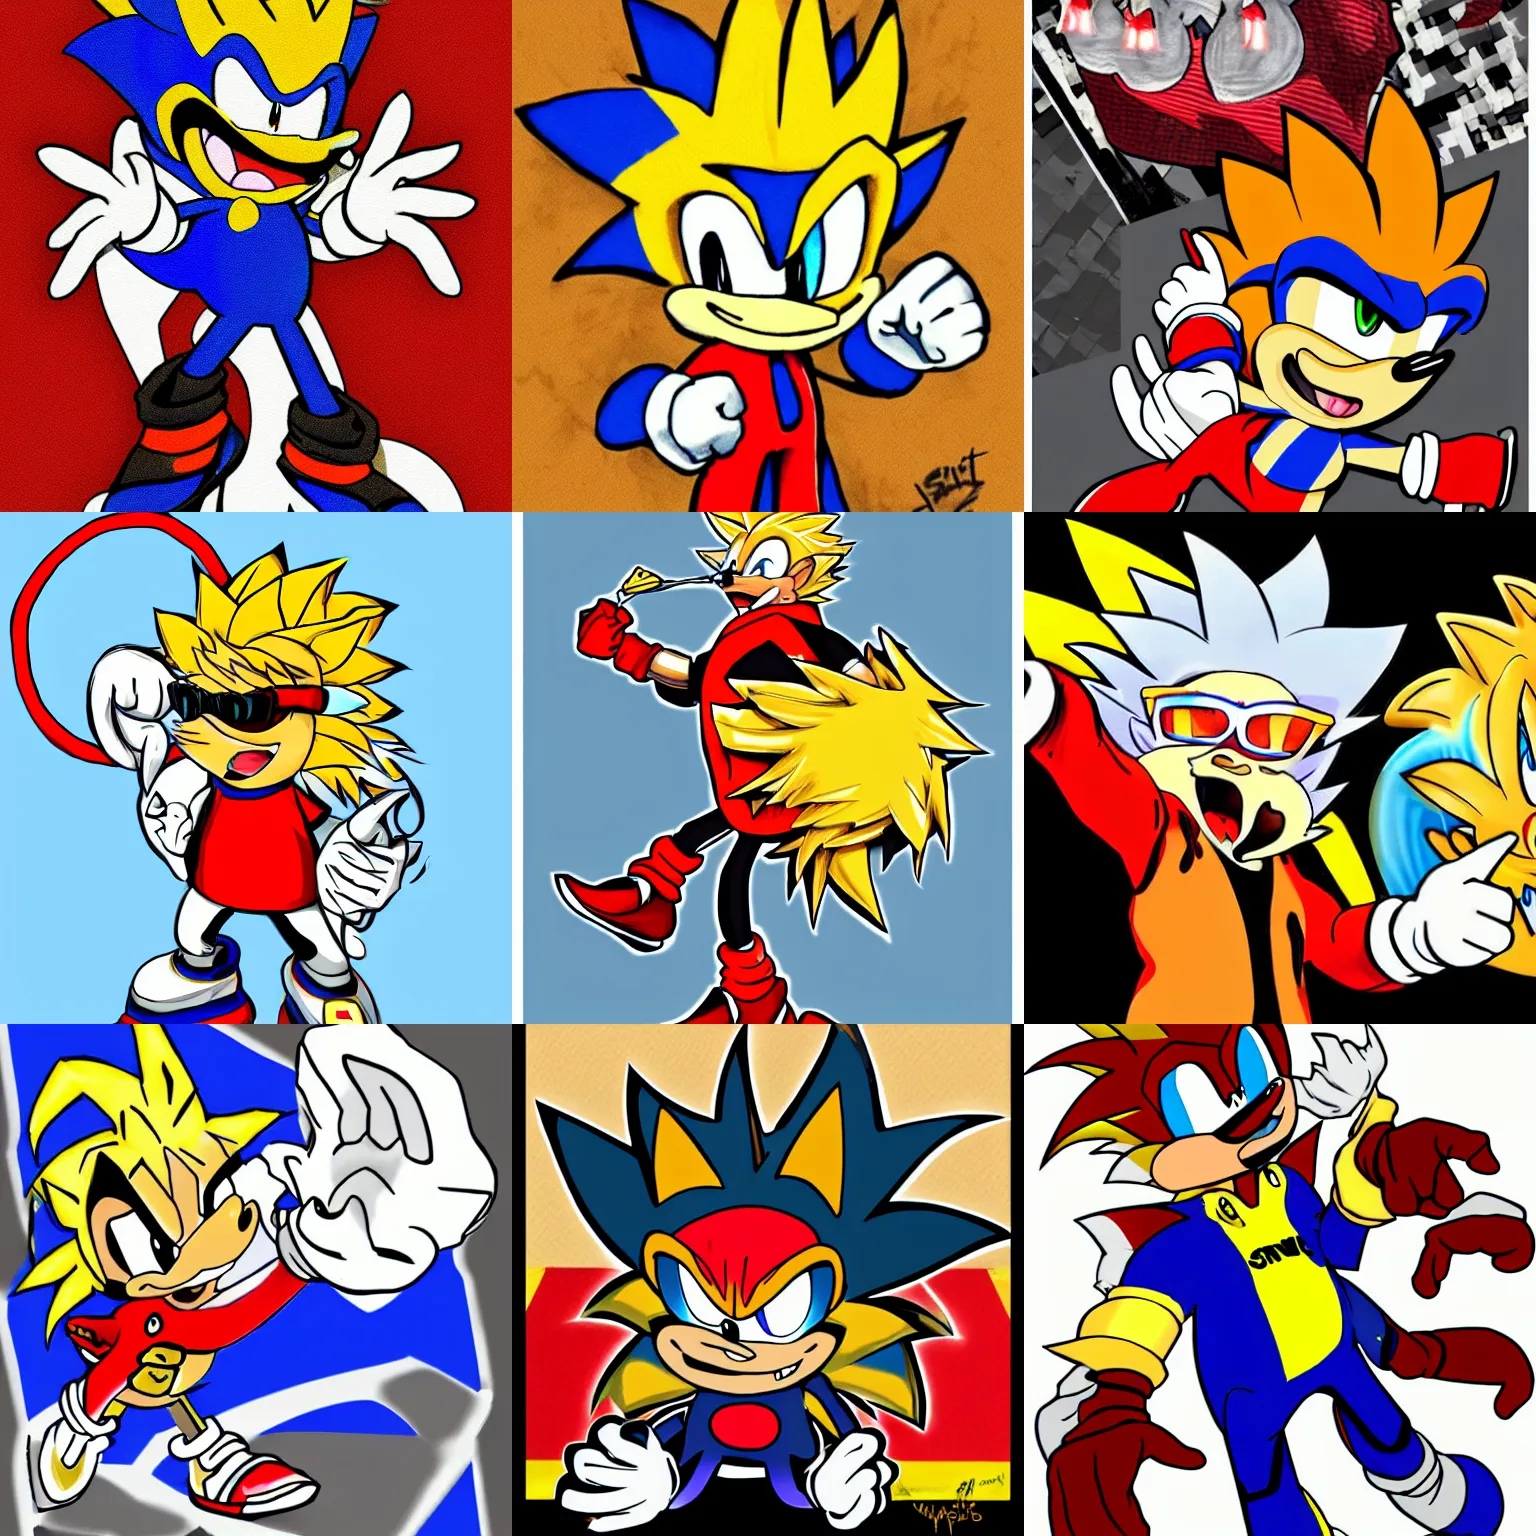 Prompt: Guy Fieri as a Sonic the Hedgehog character, original artwork, DeviantART, tumblr